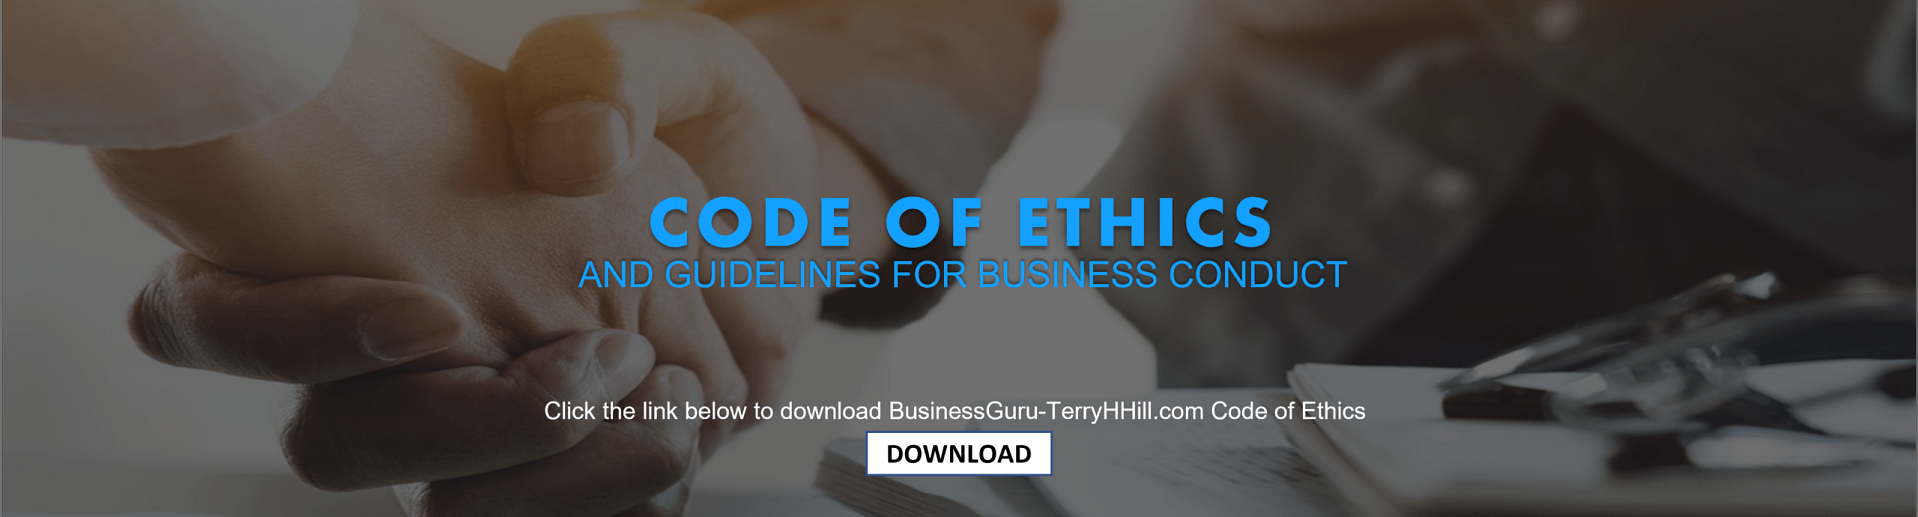 Code of Ethics at BusinessGuru-TerryHHill.com